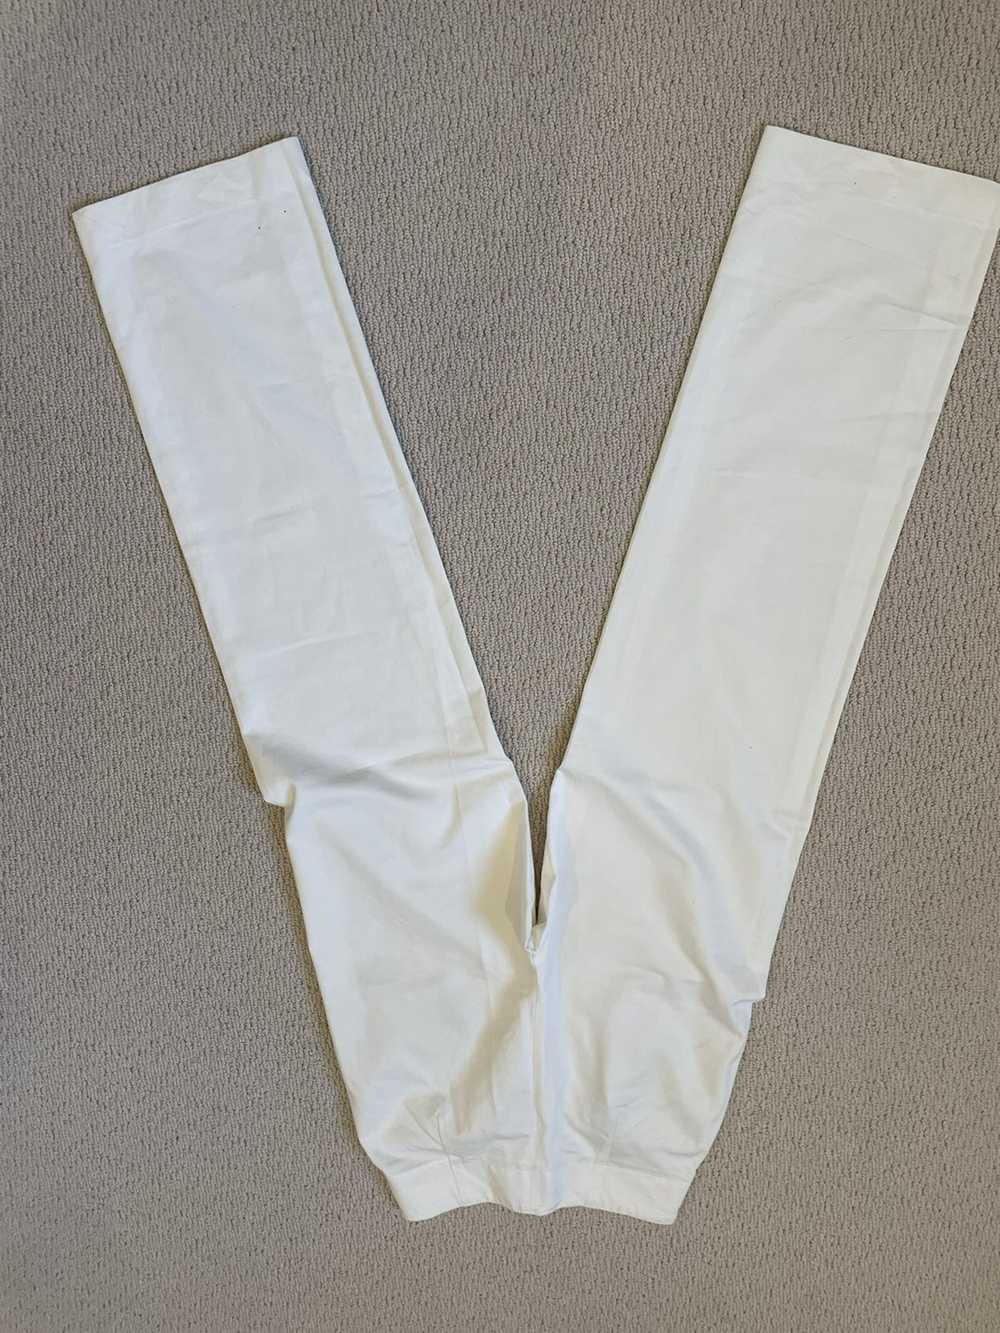 Massimo Dutti Uterque brand pants - image 7